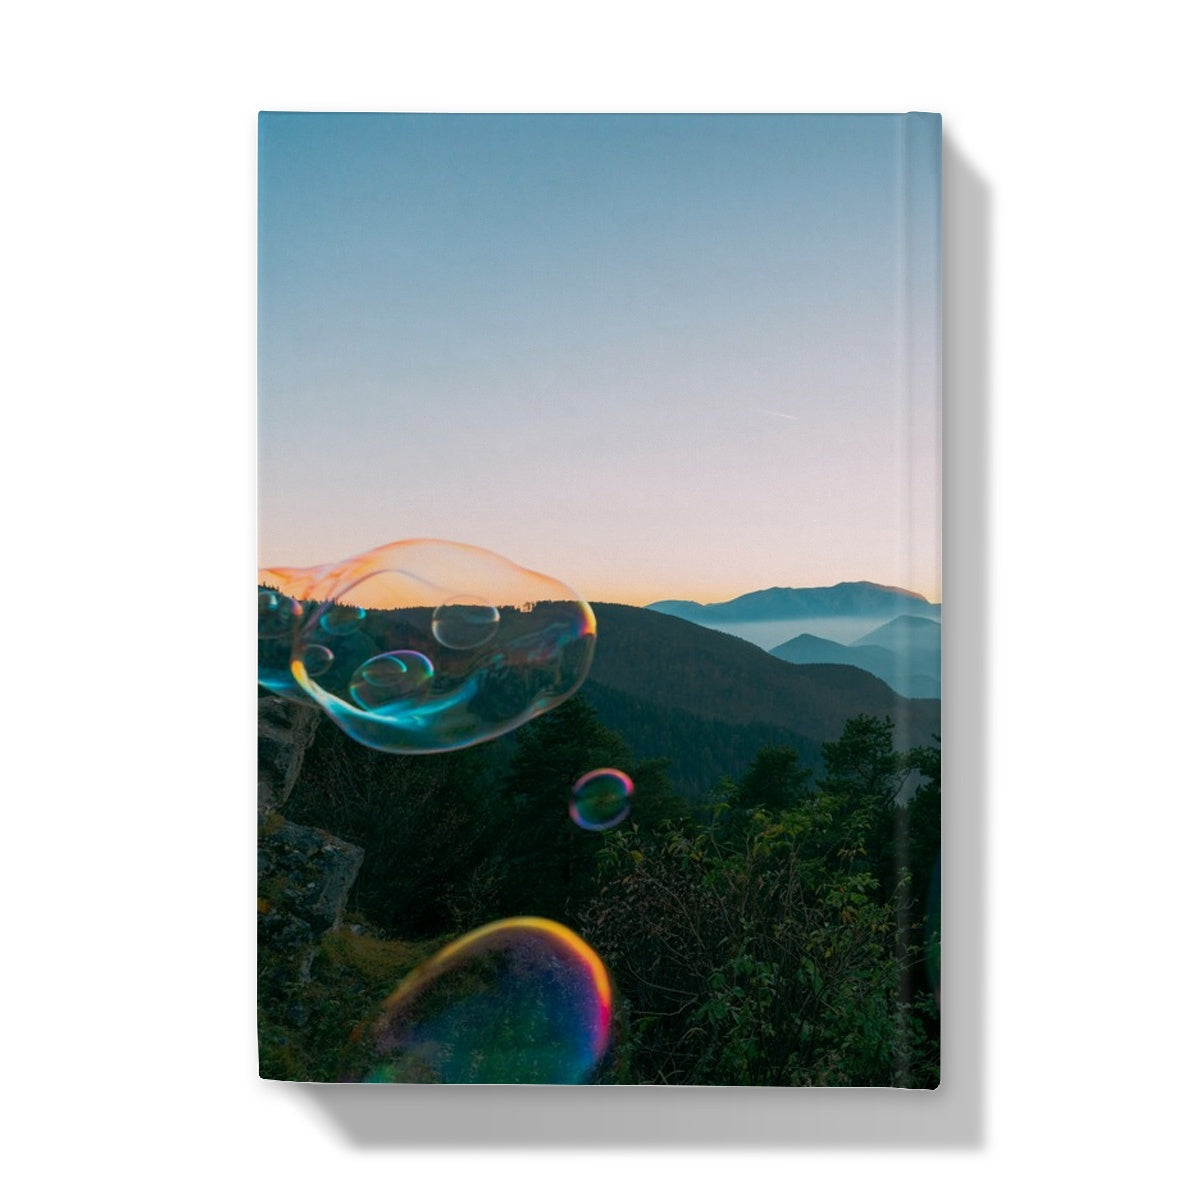 Soapbubble Studies // Hohe Wand Hardback Journal